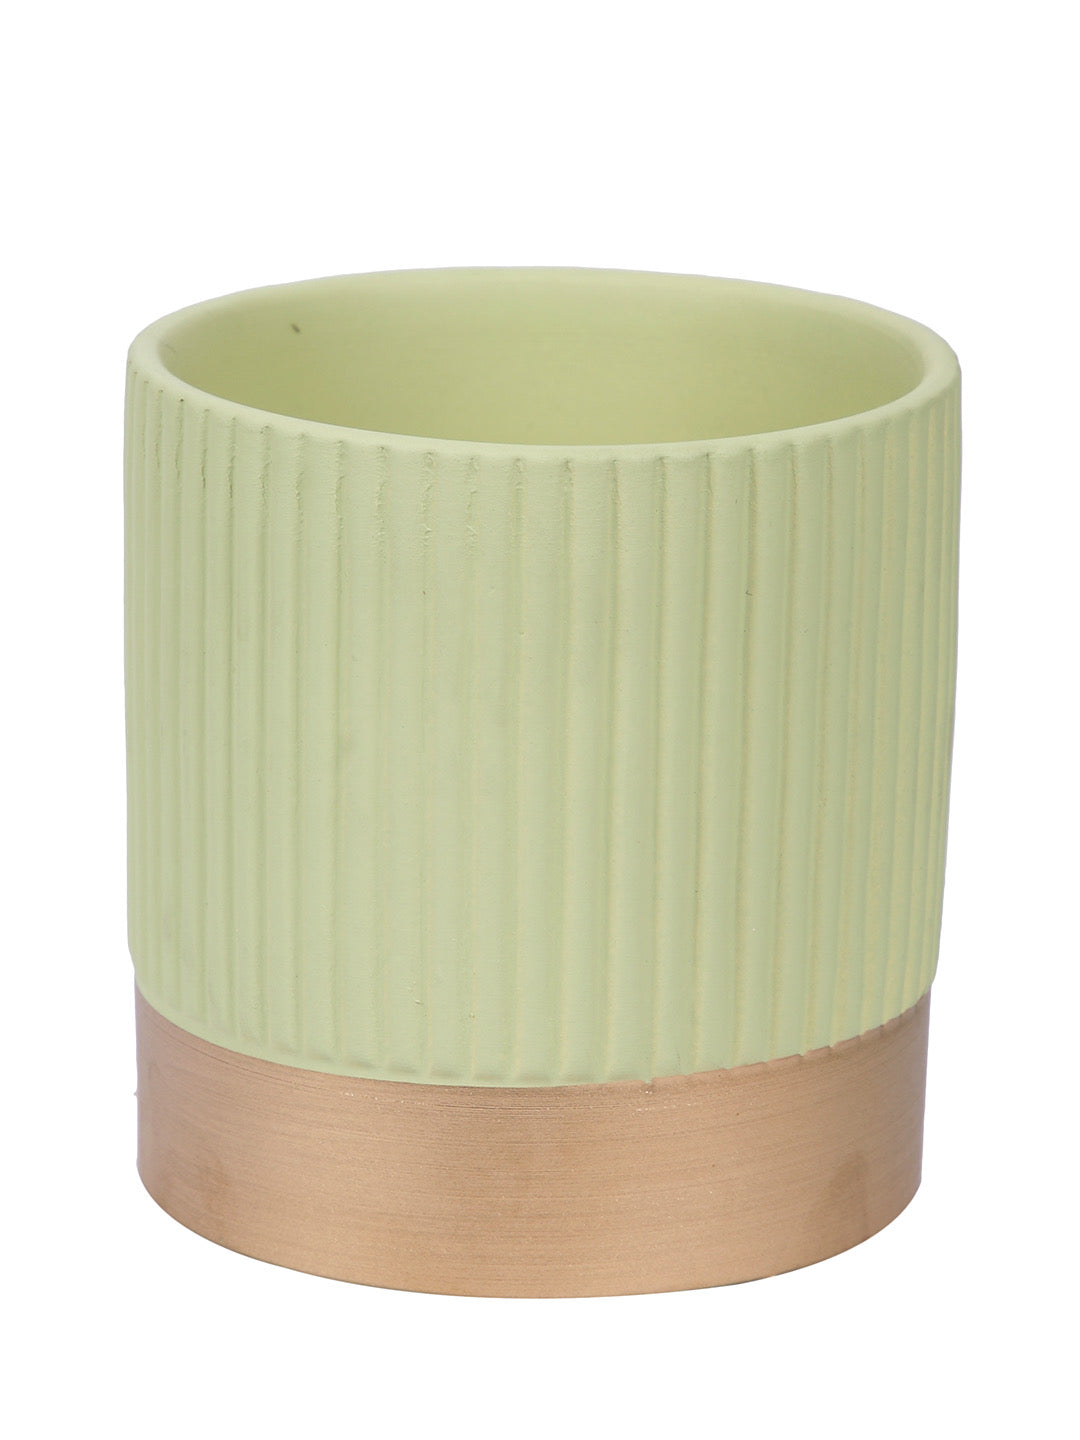 Fluted Design Ceramic Planter with Golden Border - Default Title (CHC22506YE)